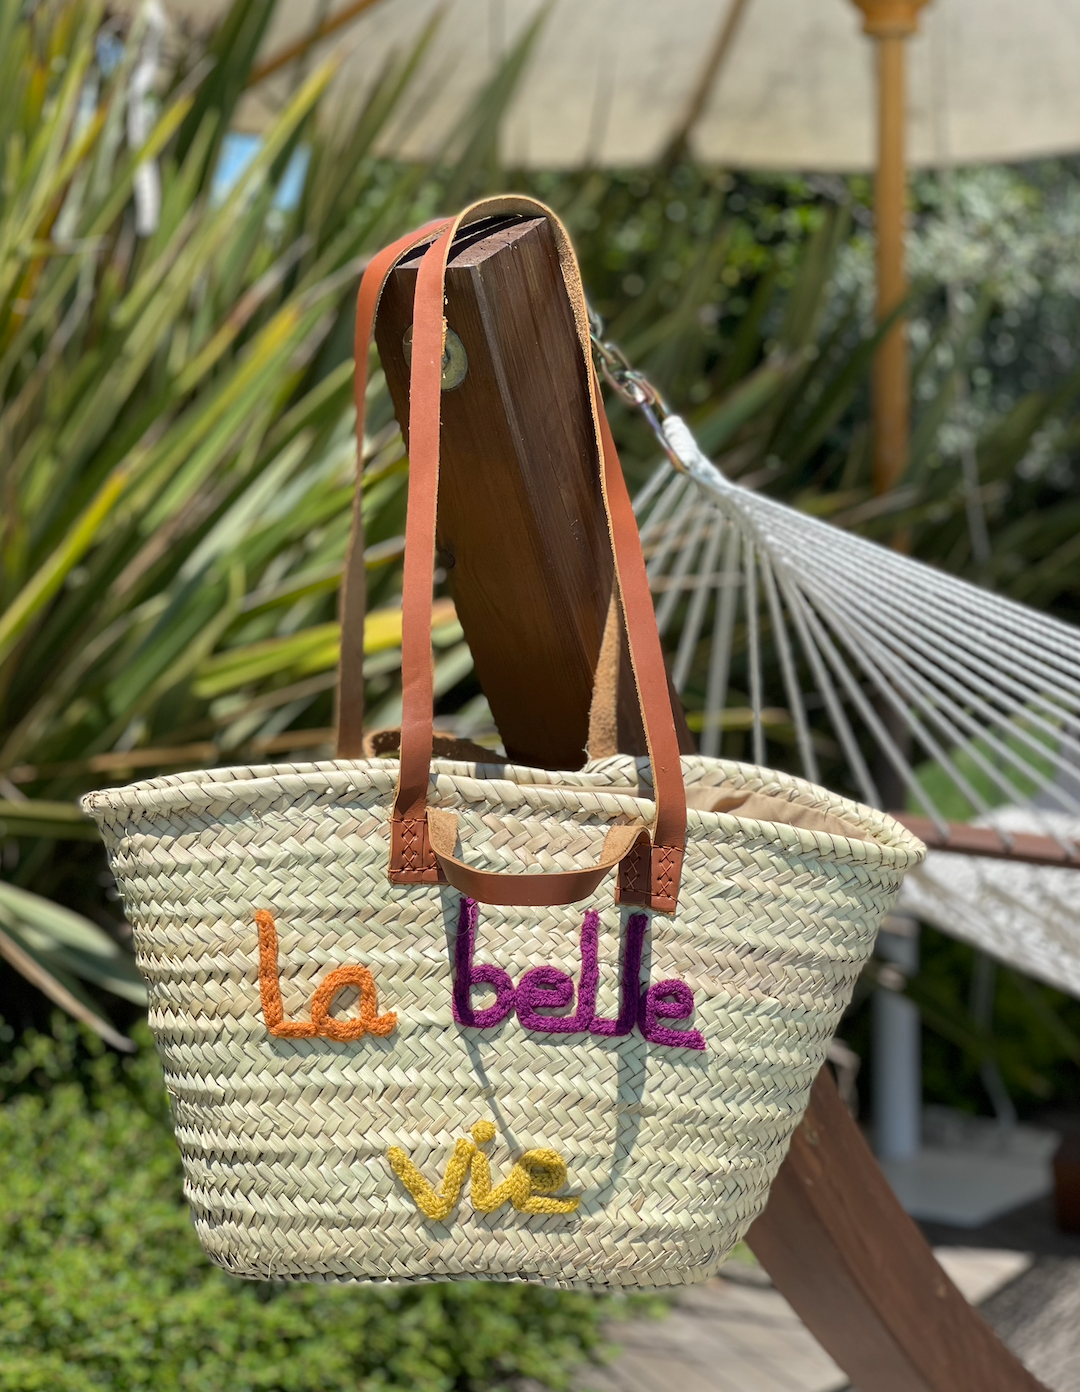 Nizza "La belle vie" bag